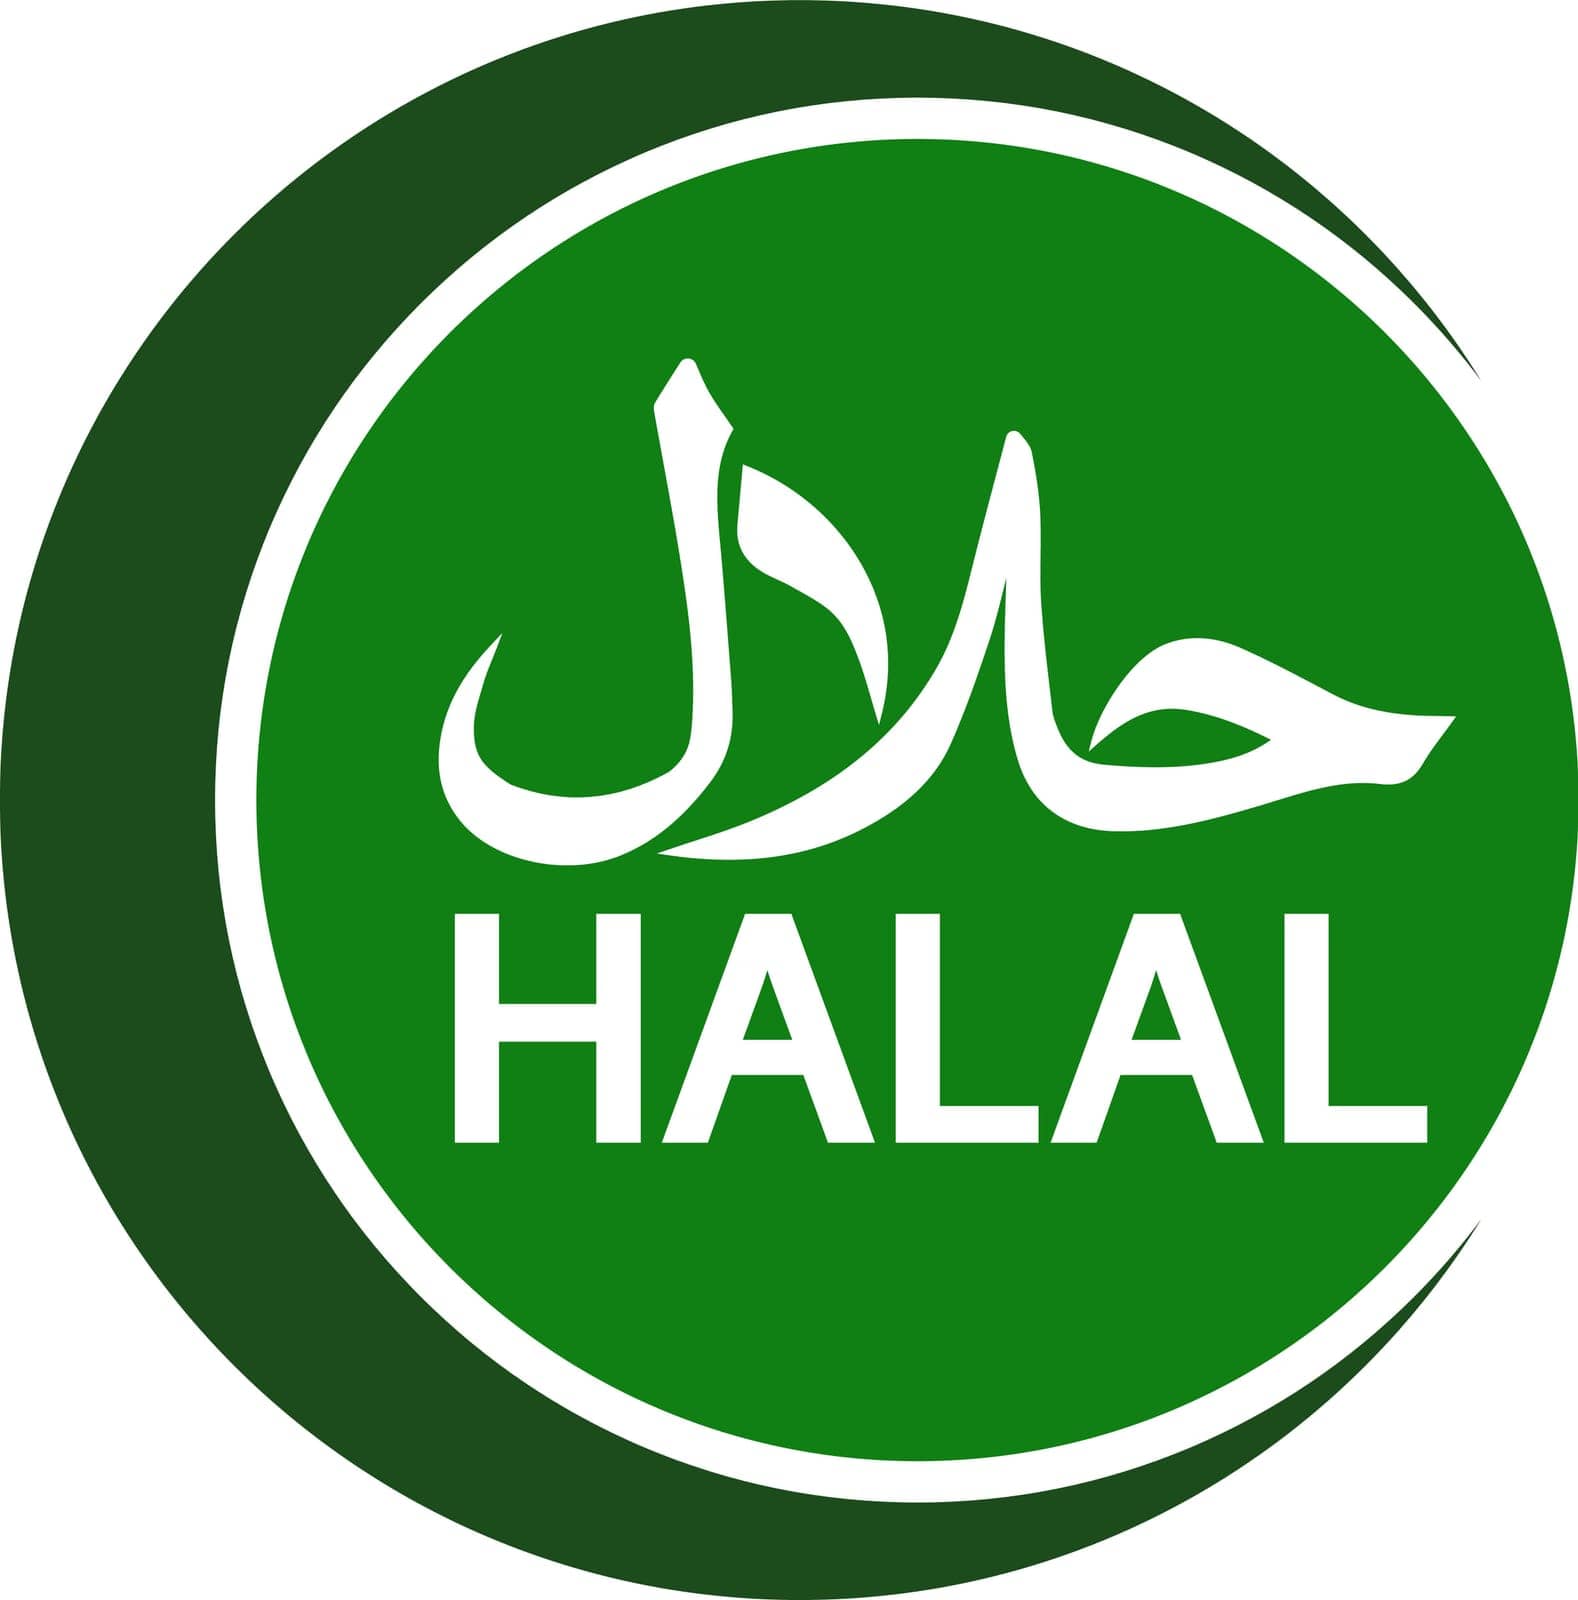 Halal logo emblem, vector Halal sign certificate tag